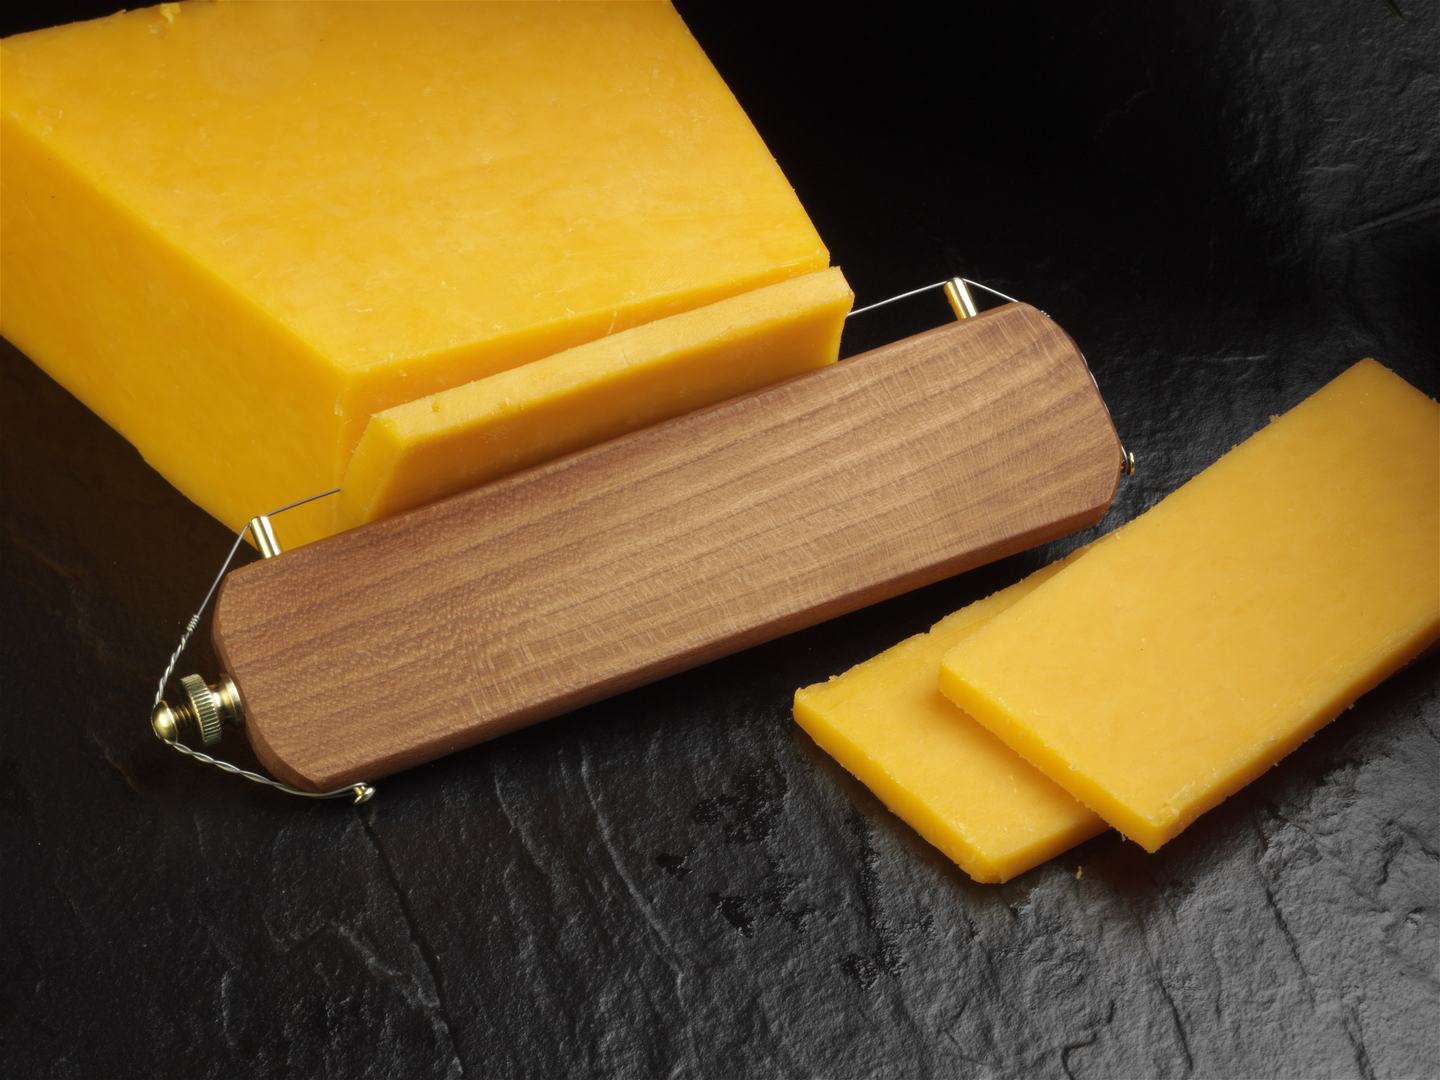 Wood Cheese Slicer